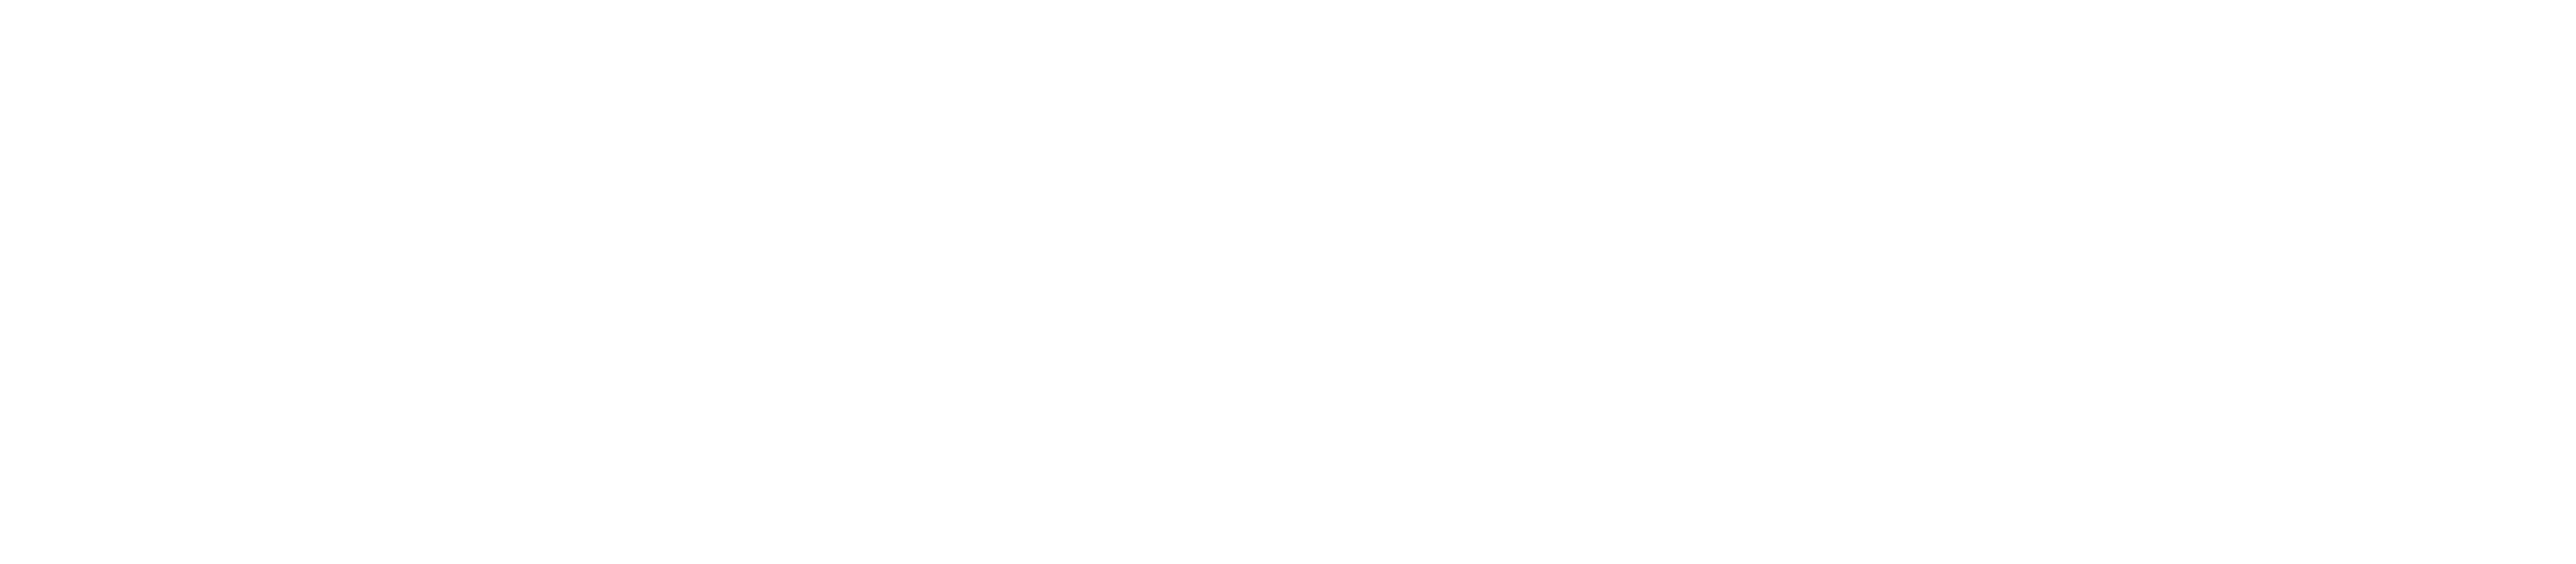 Coldwell Banker Türkiye